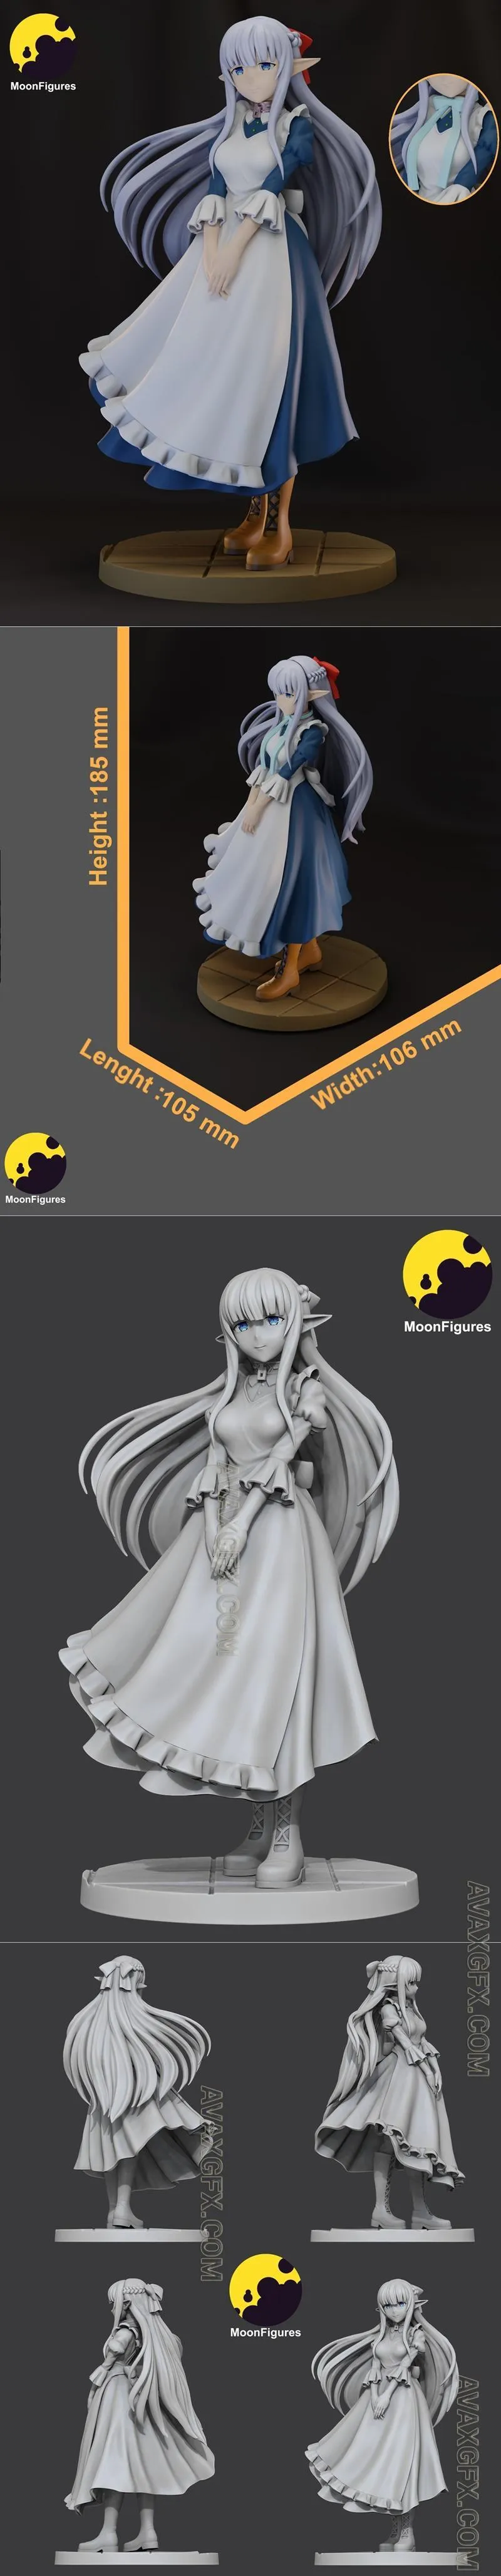 MoonFigures - Nephelia - STL 3D Model